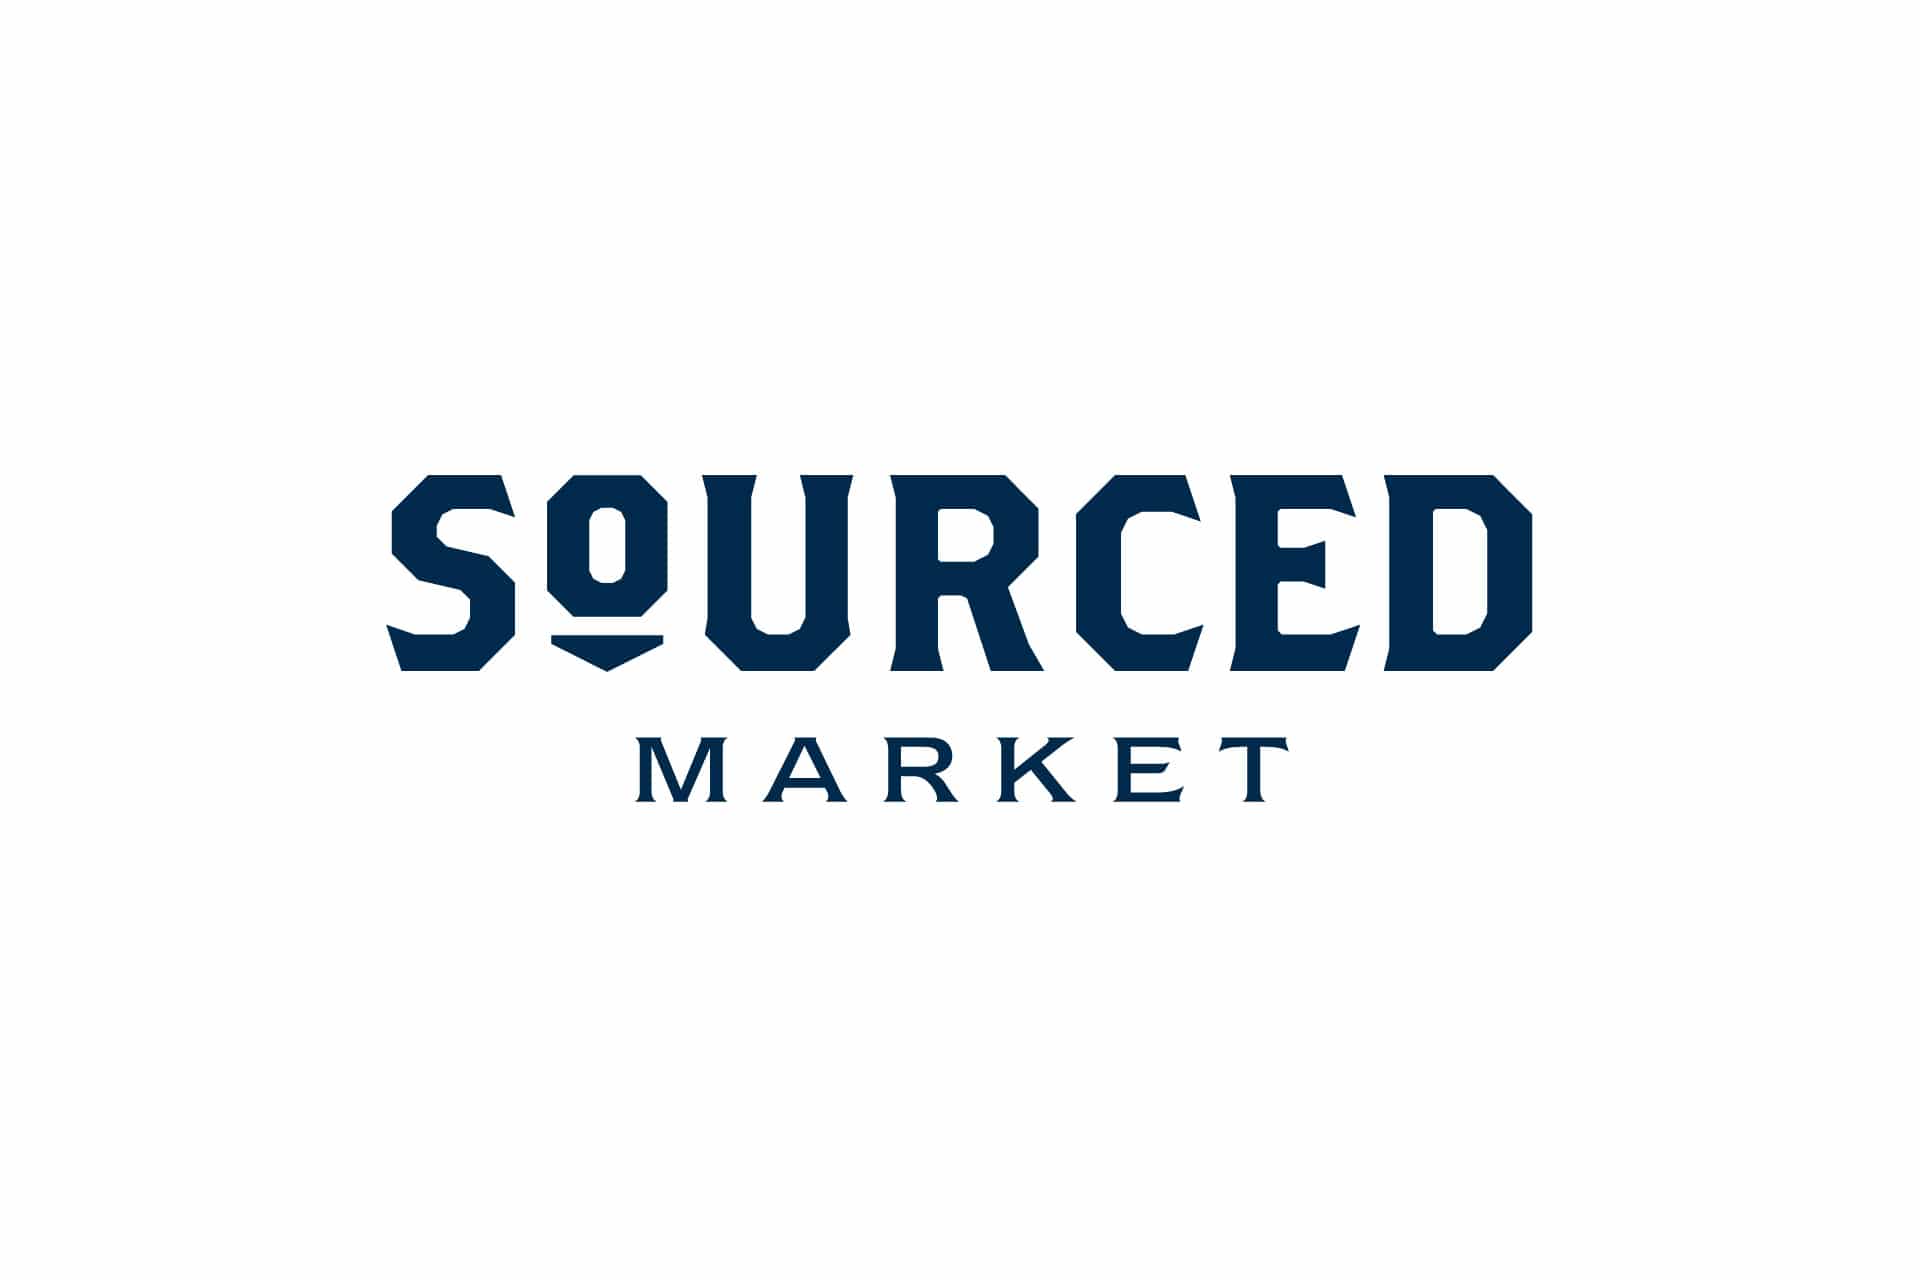 TrueOutput - Sourced Market